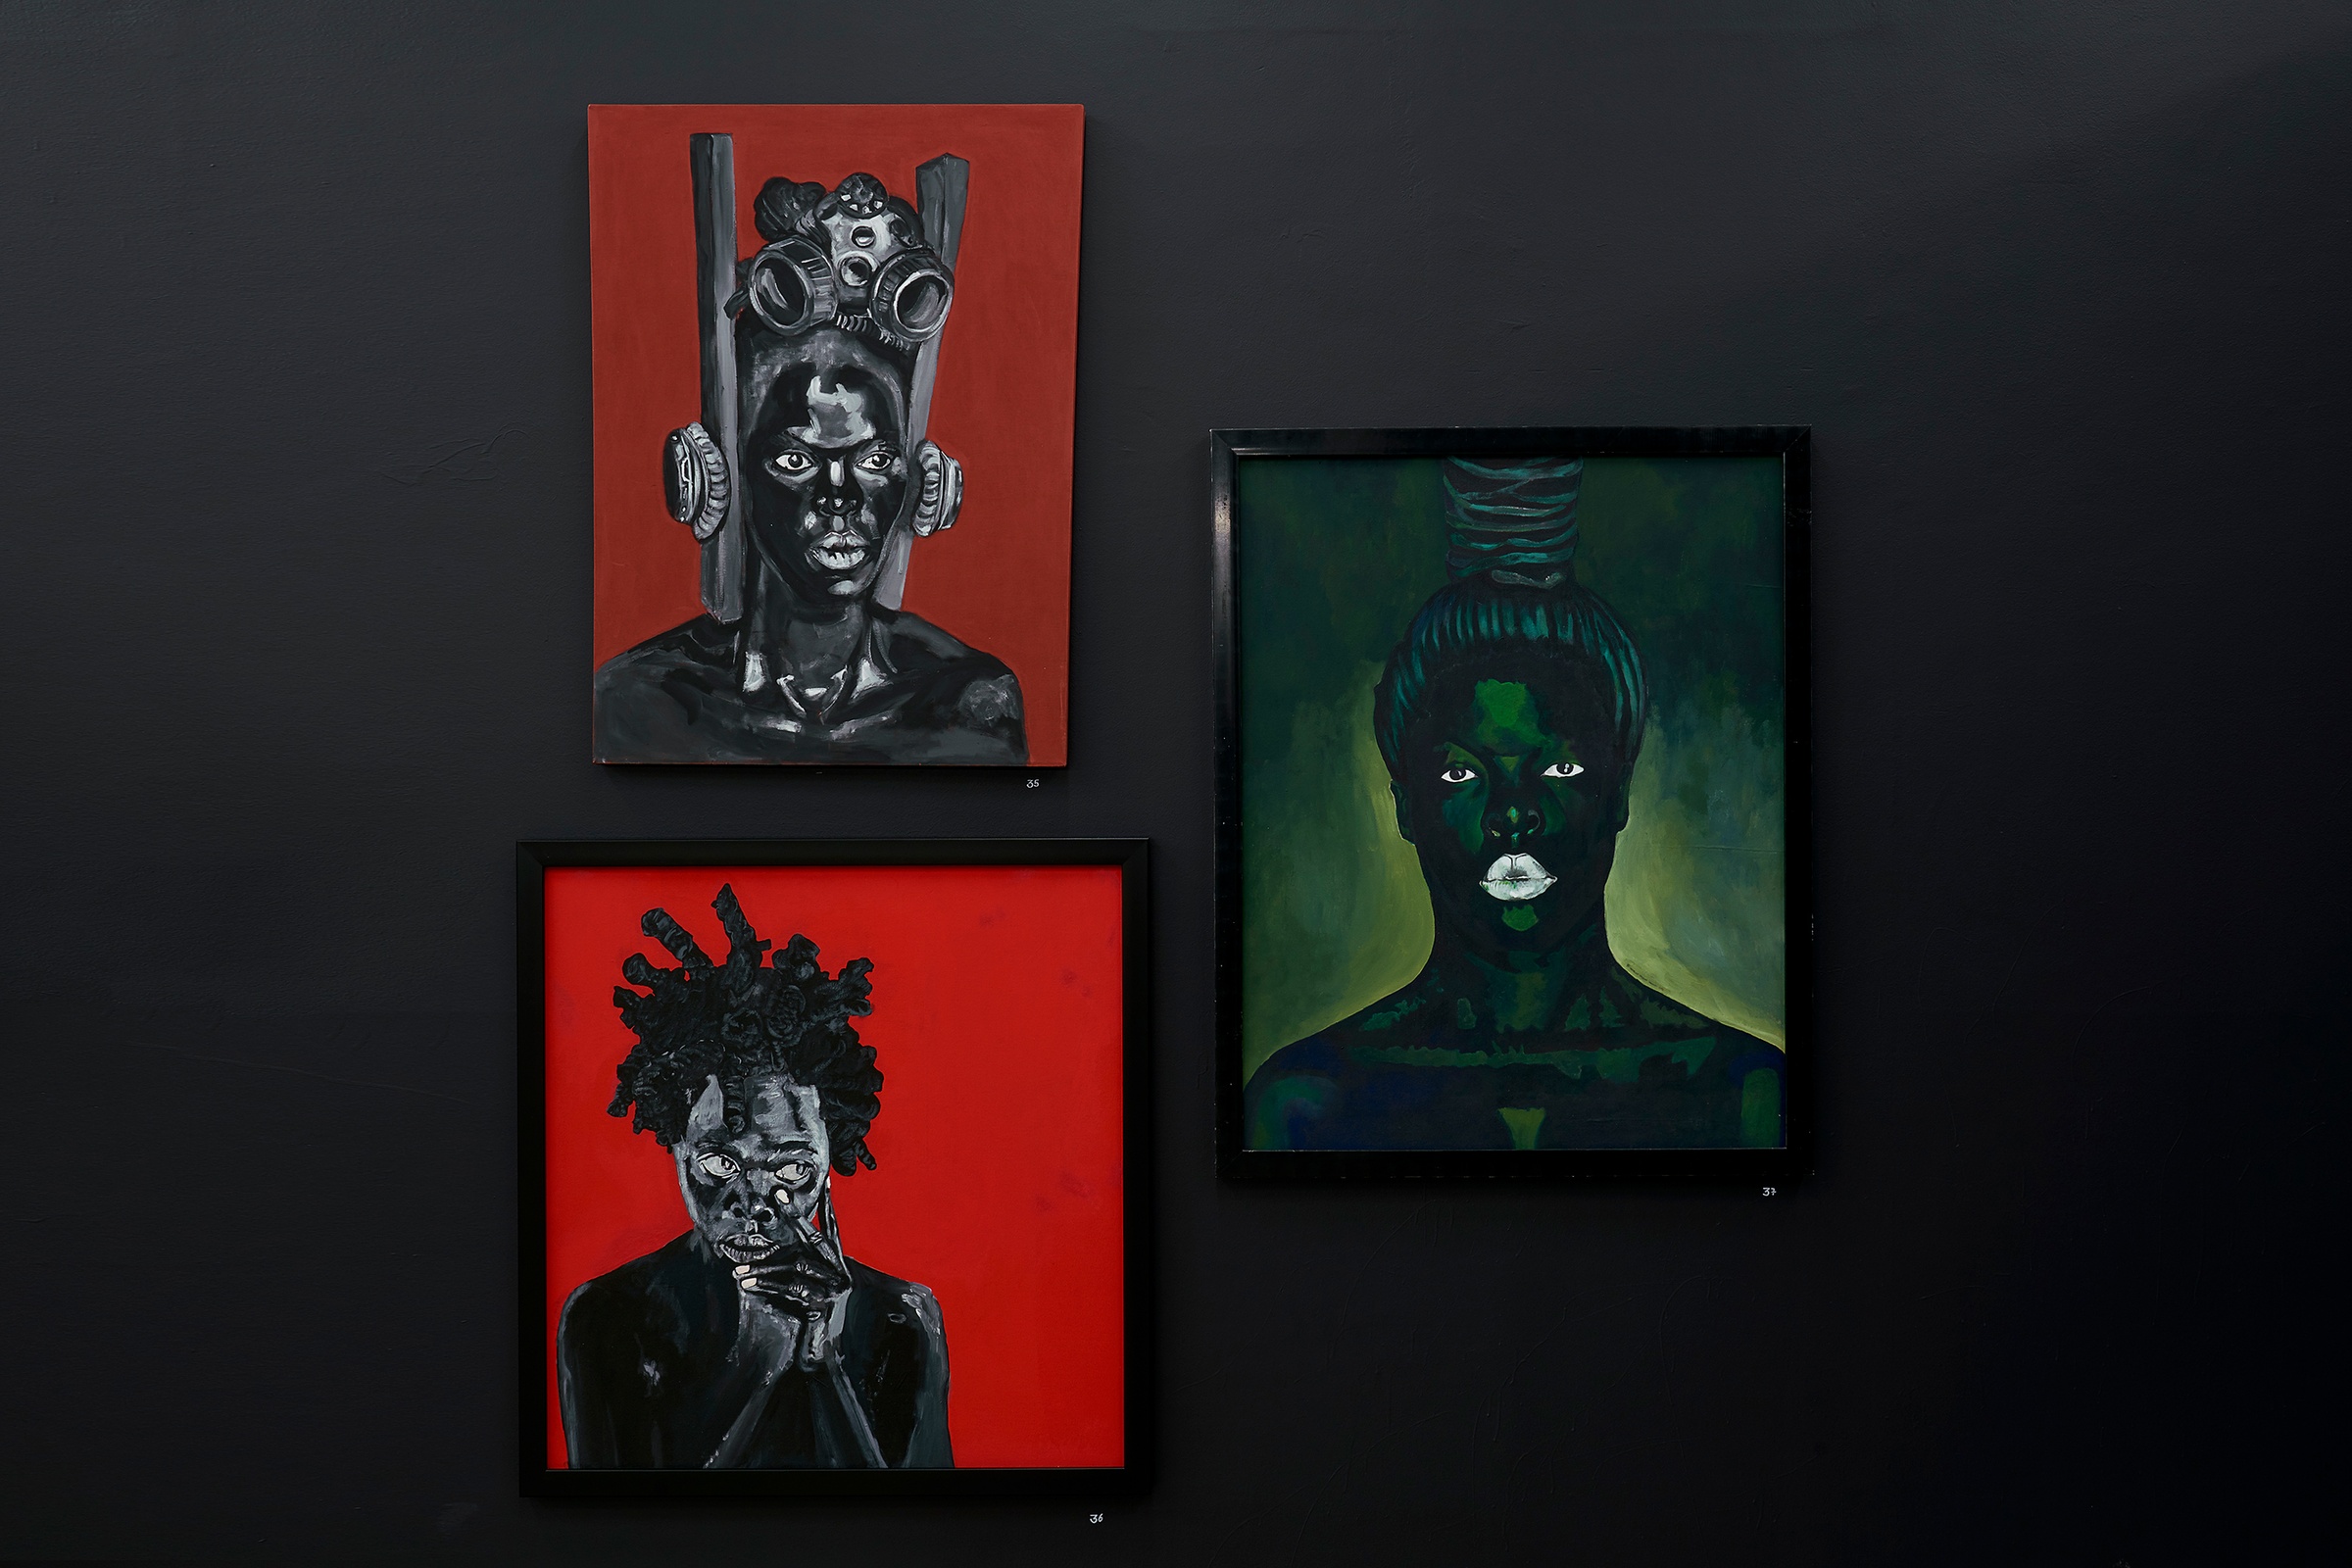 Installation photograph from the “Ikhono LaseNatali” exhibition in A4’s Gallery. On the left, Ncumisa Mcitwa’s acrylic painting “Somnyama Ngonyama, ‘Nambhla at Cassilbaus’” and Sphephelo Mnguni’s “Somnyama Ngonyama ‘Khwezi’” are mounted to a black gallery wall. On the right, Nomusa Musah Mtshali’s acrylic painting “Somnyama Ngonyama” is mounted on the wall.
